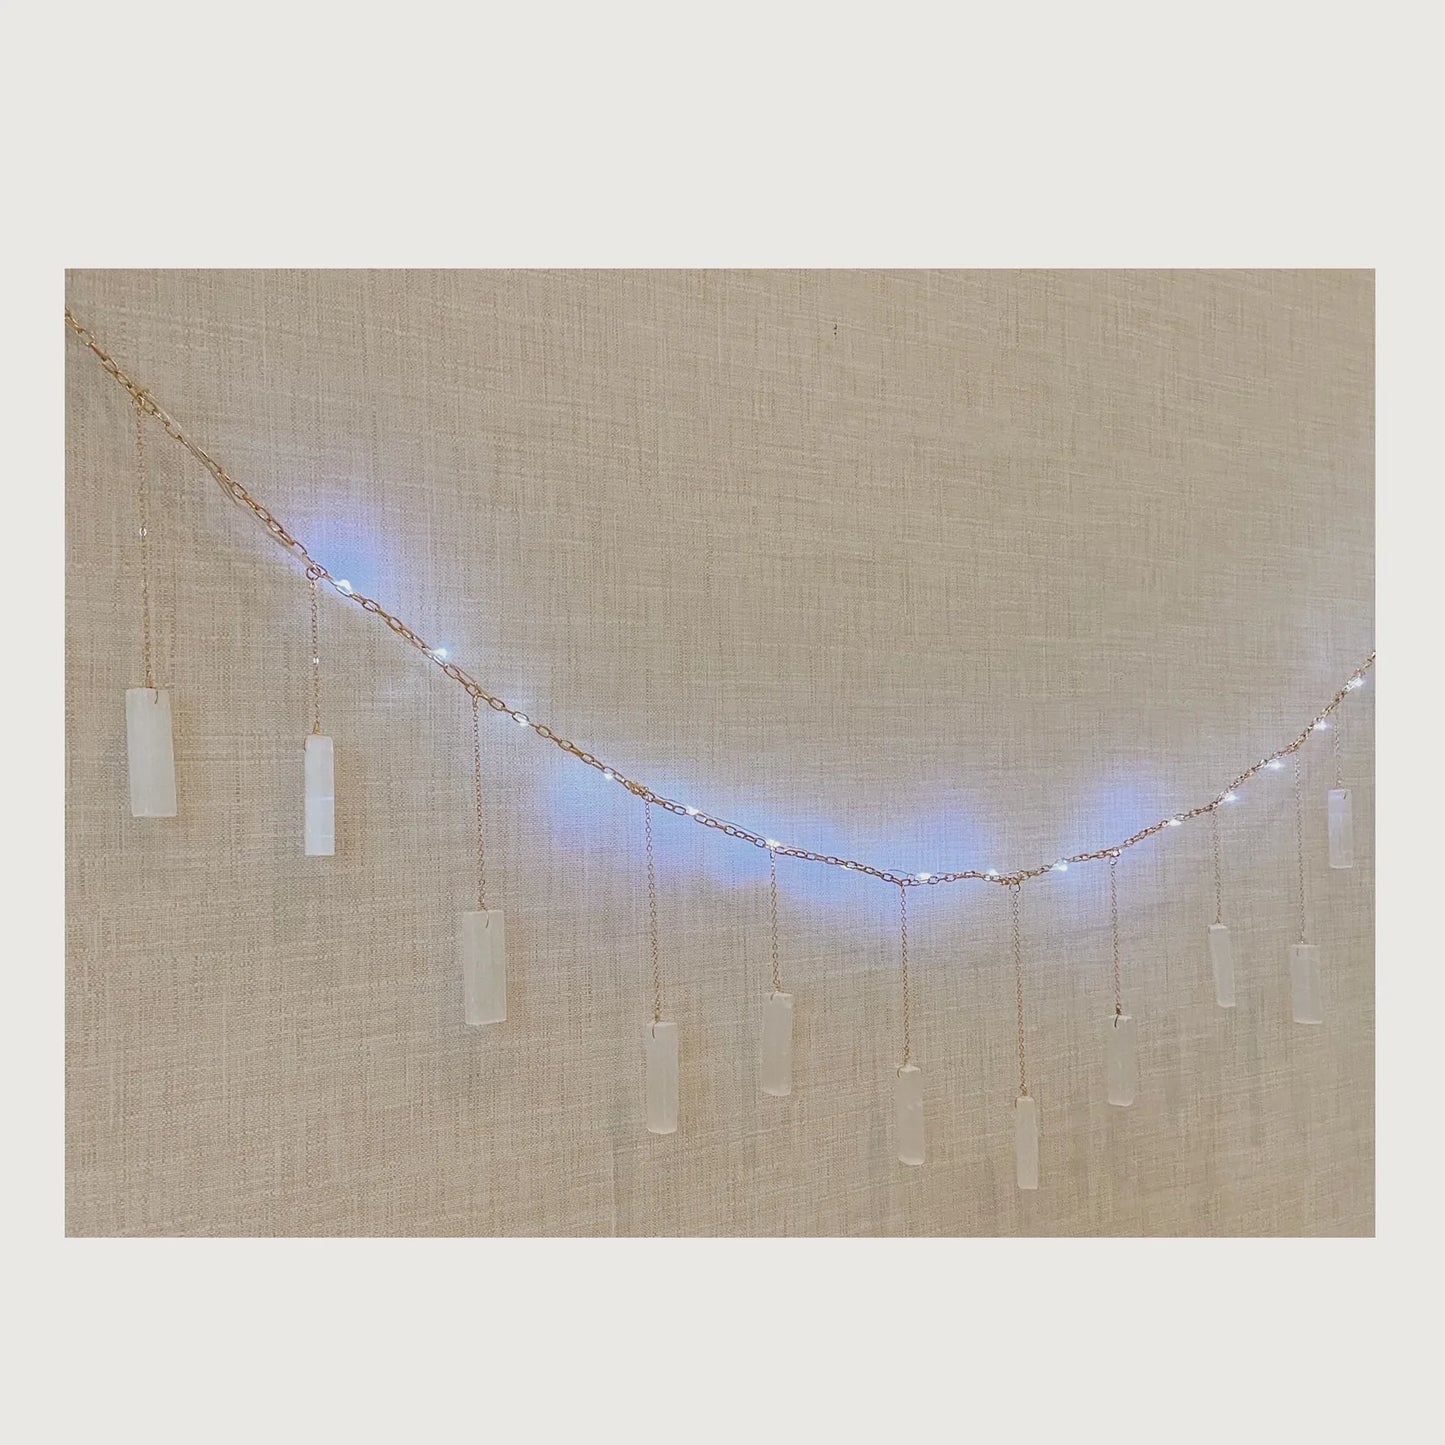 Selenite Garland with String Lighting